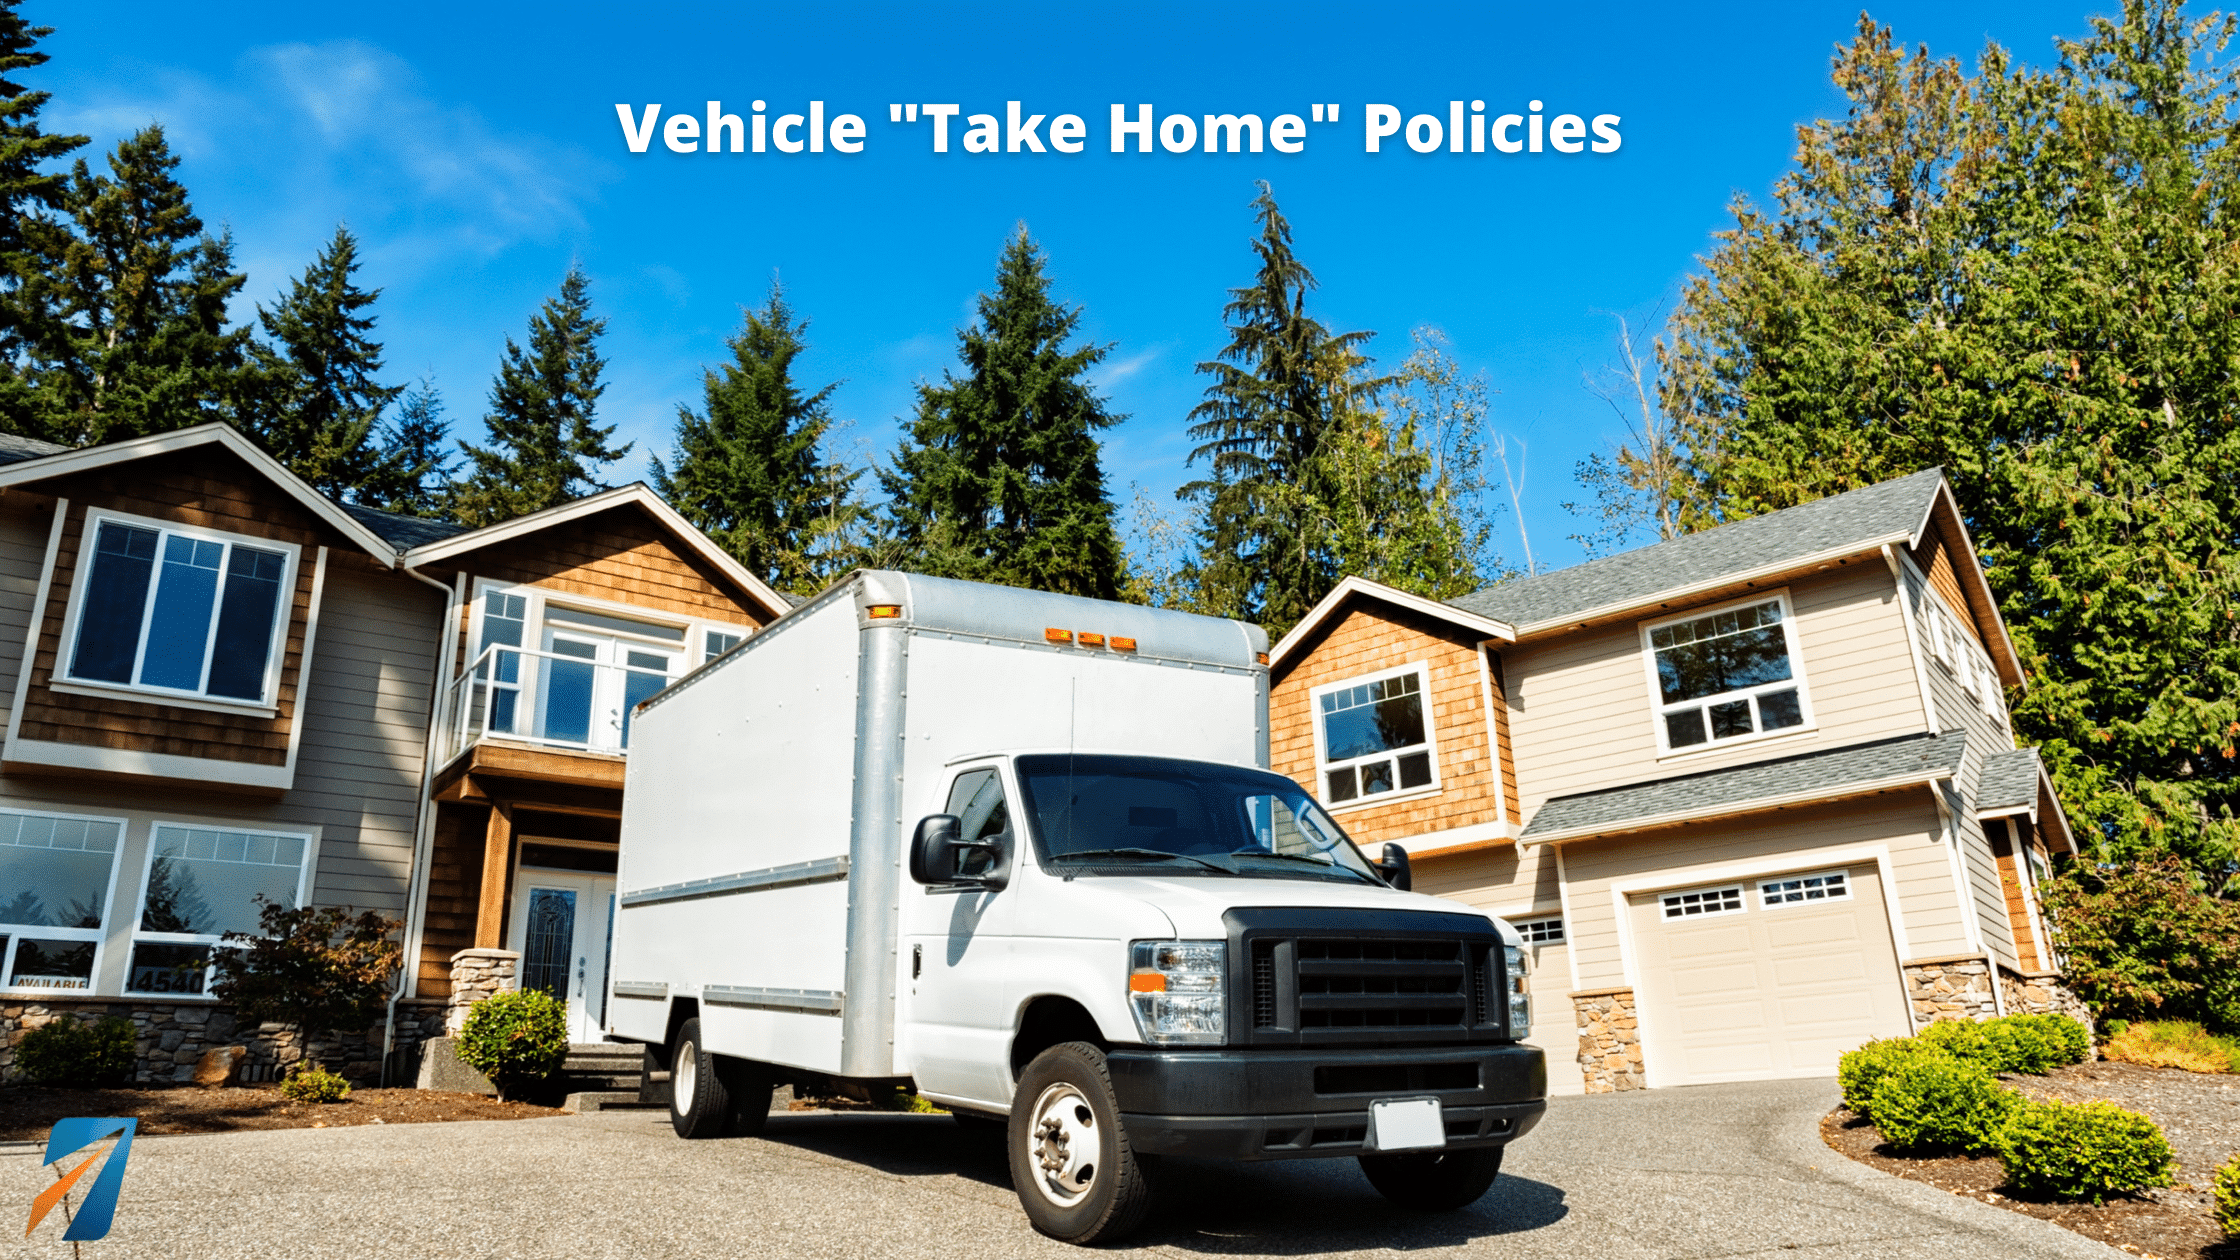 Vehicle "Take Home" Policies